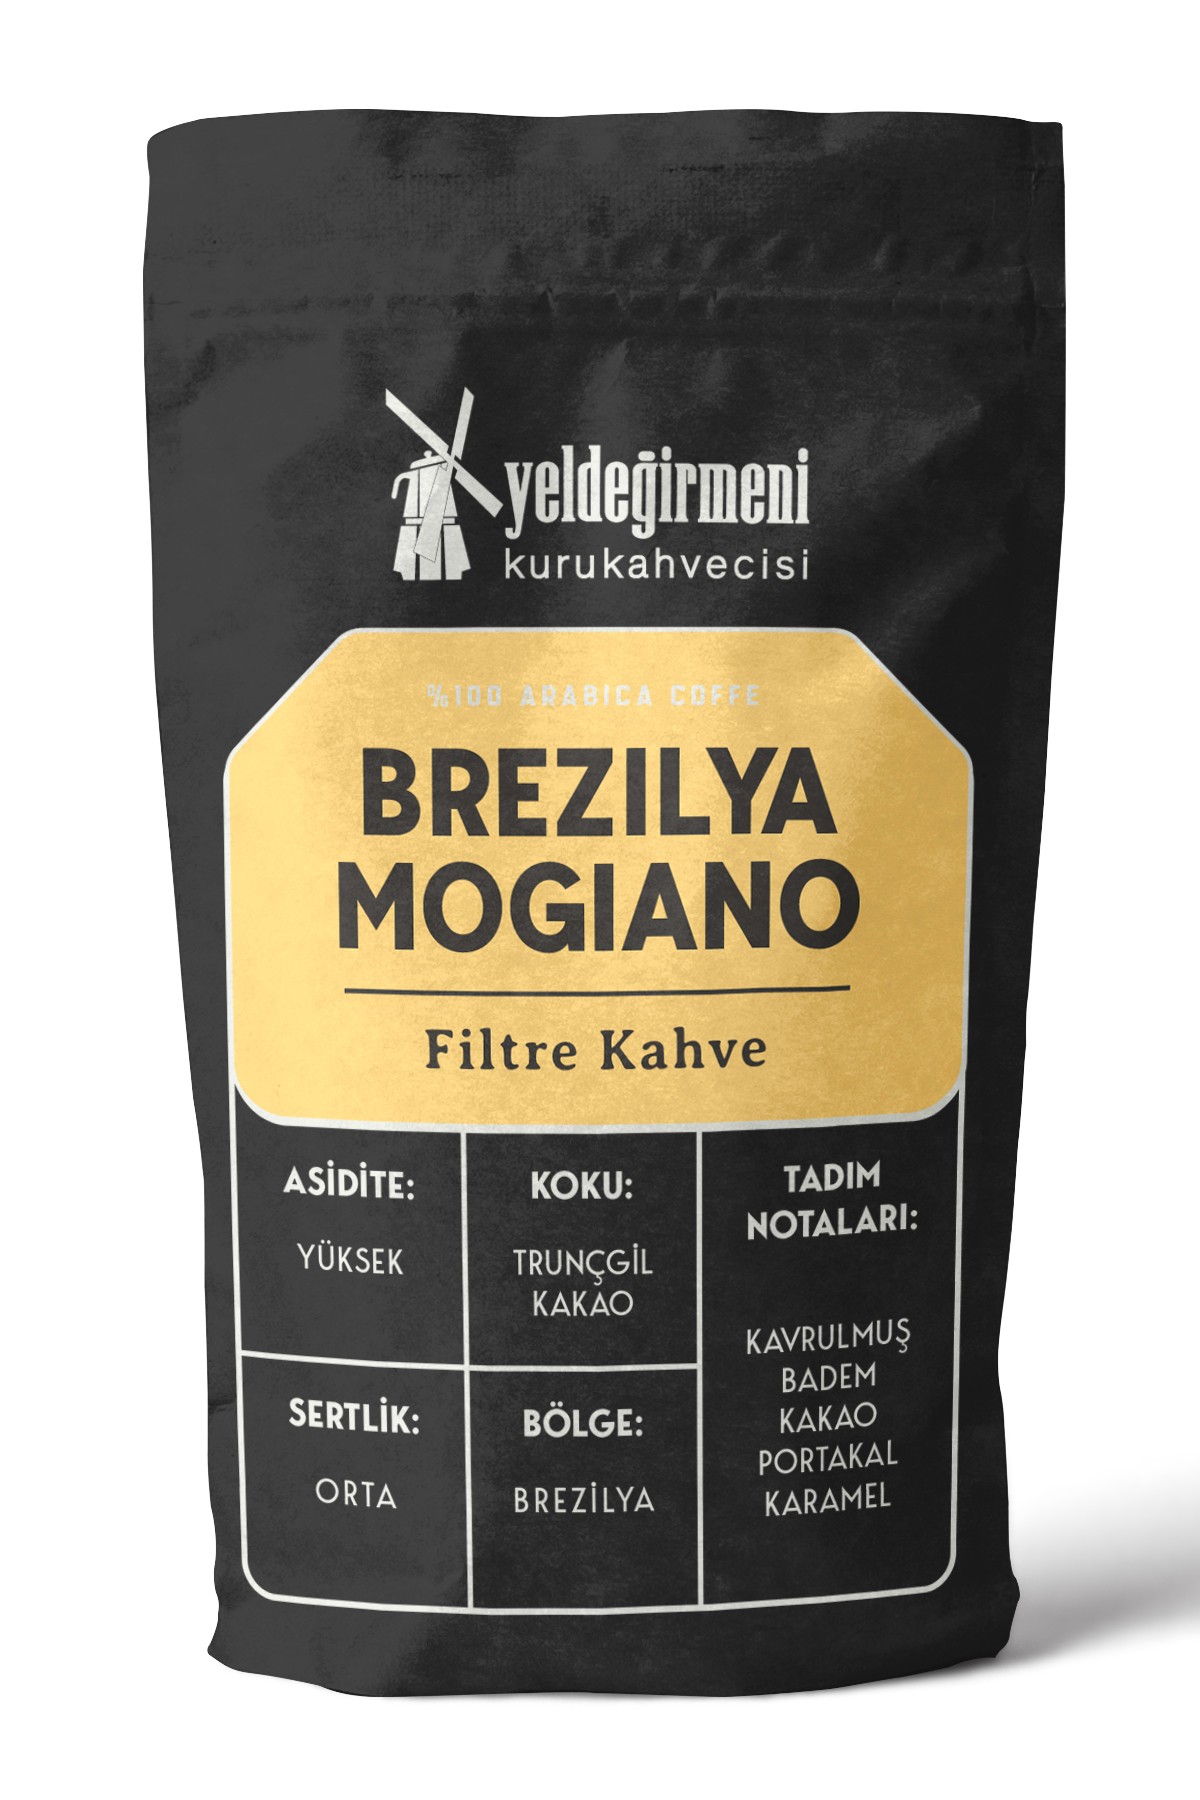 Brezilya Mogiano Filtre Kahve